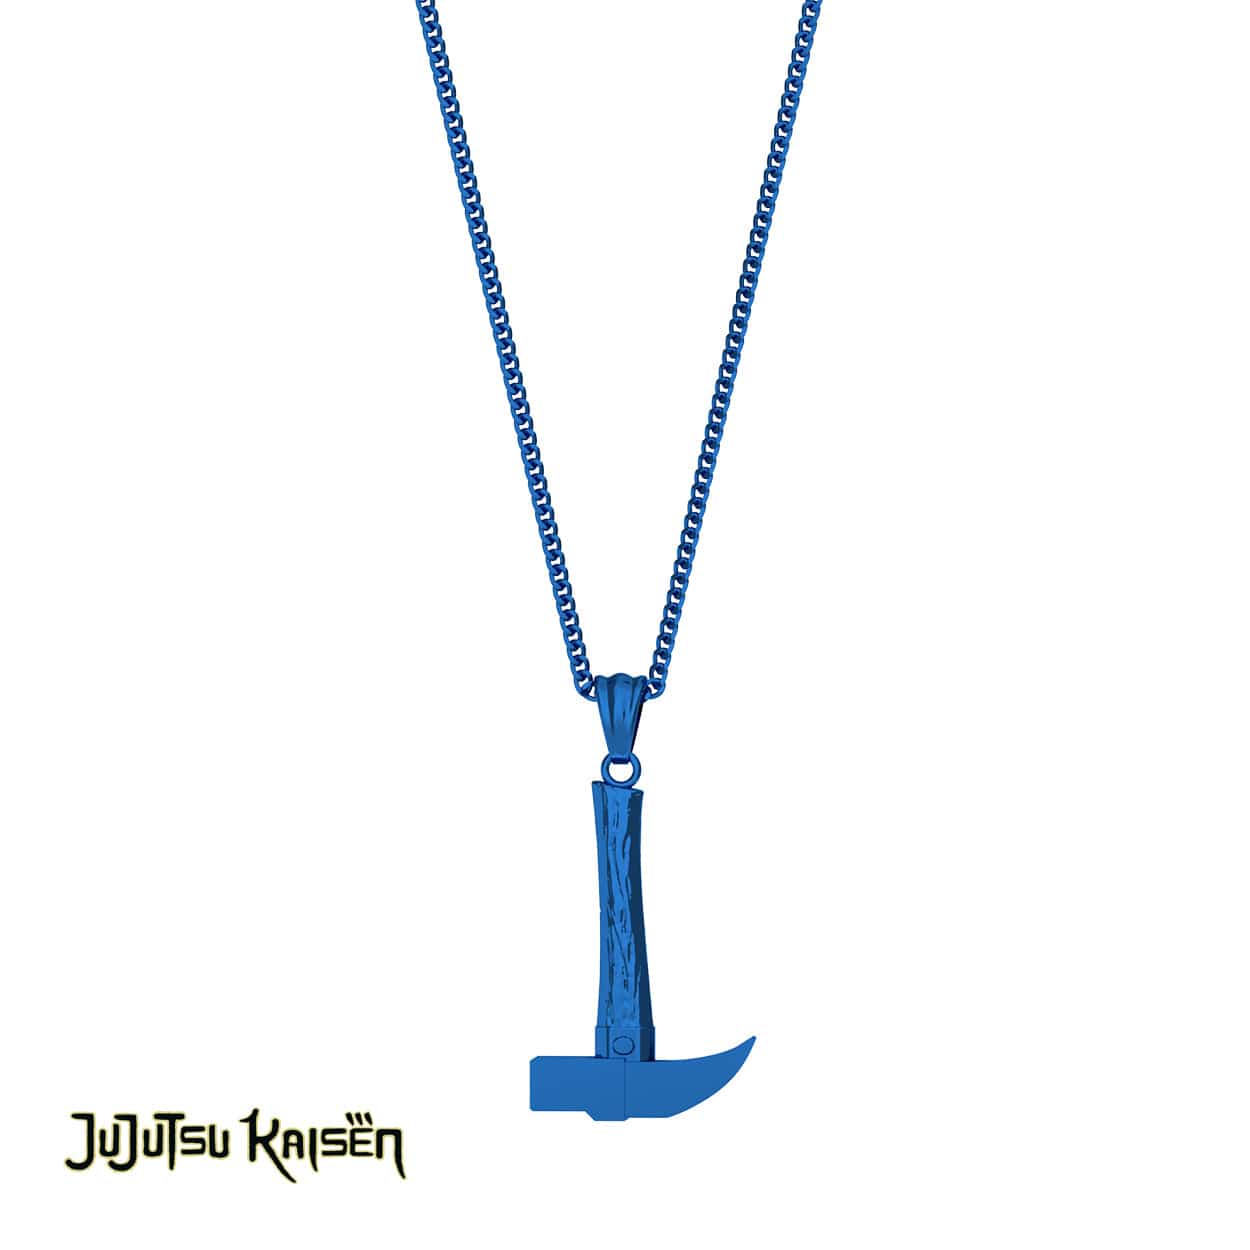 Jujutsu Kaisen™ Nobara's Hammer Necklace - Limited Edition Colors